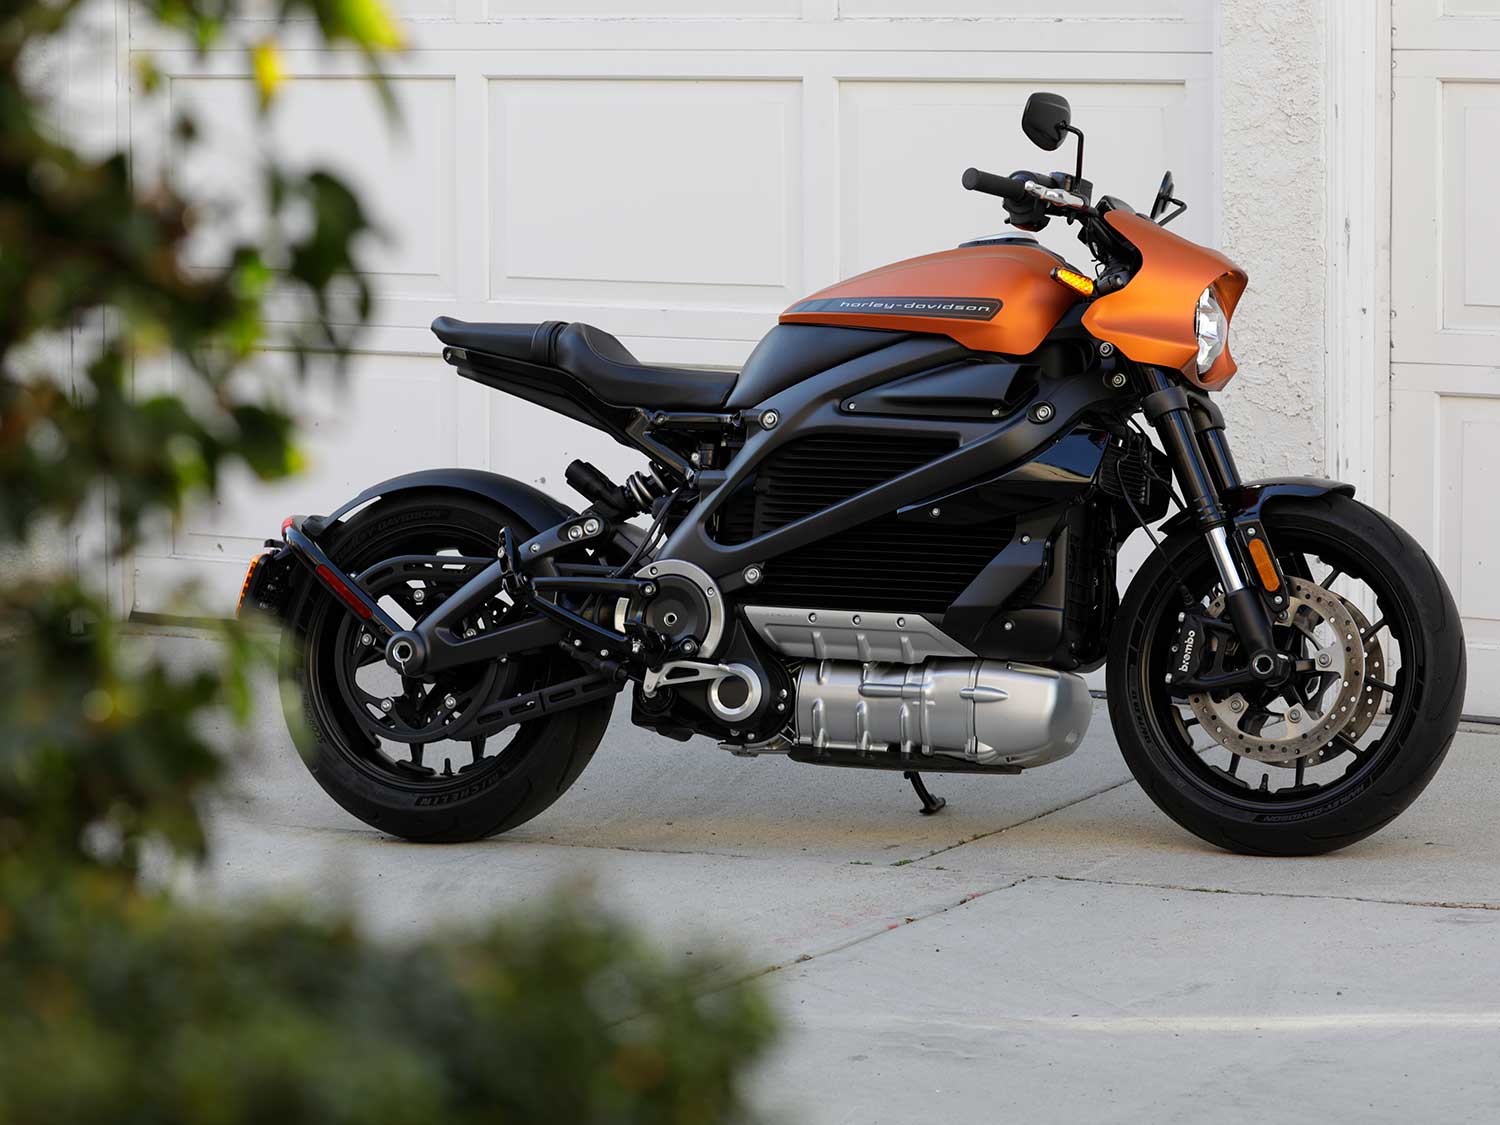 2020 Harley-Davidson LiveWire Road Test Review